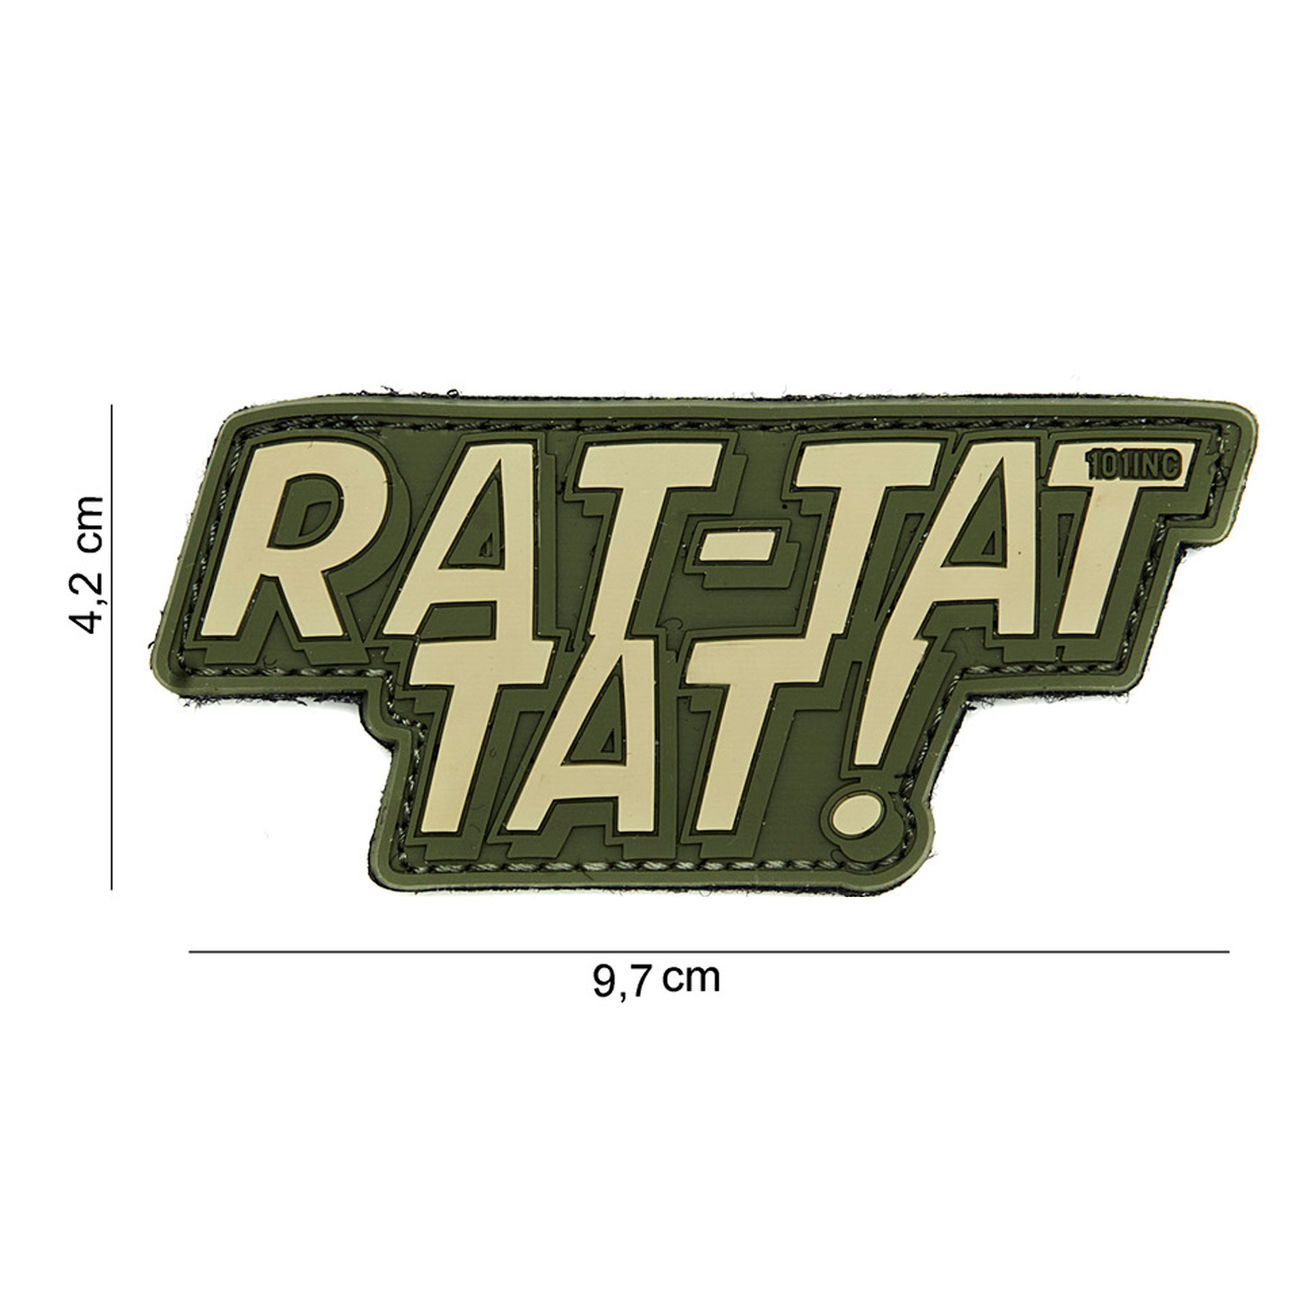 101 INC. 3D Rubber Patch Rat-tat tat oliv/sand